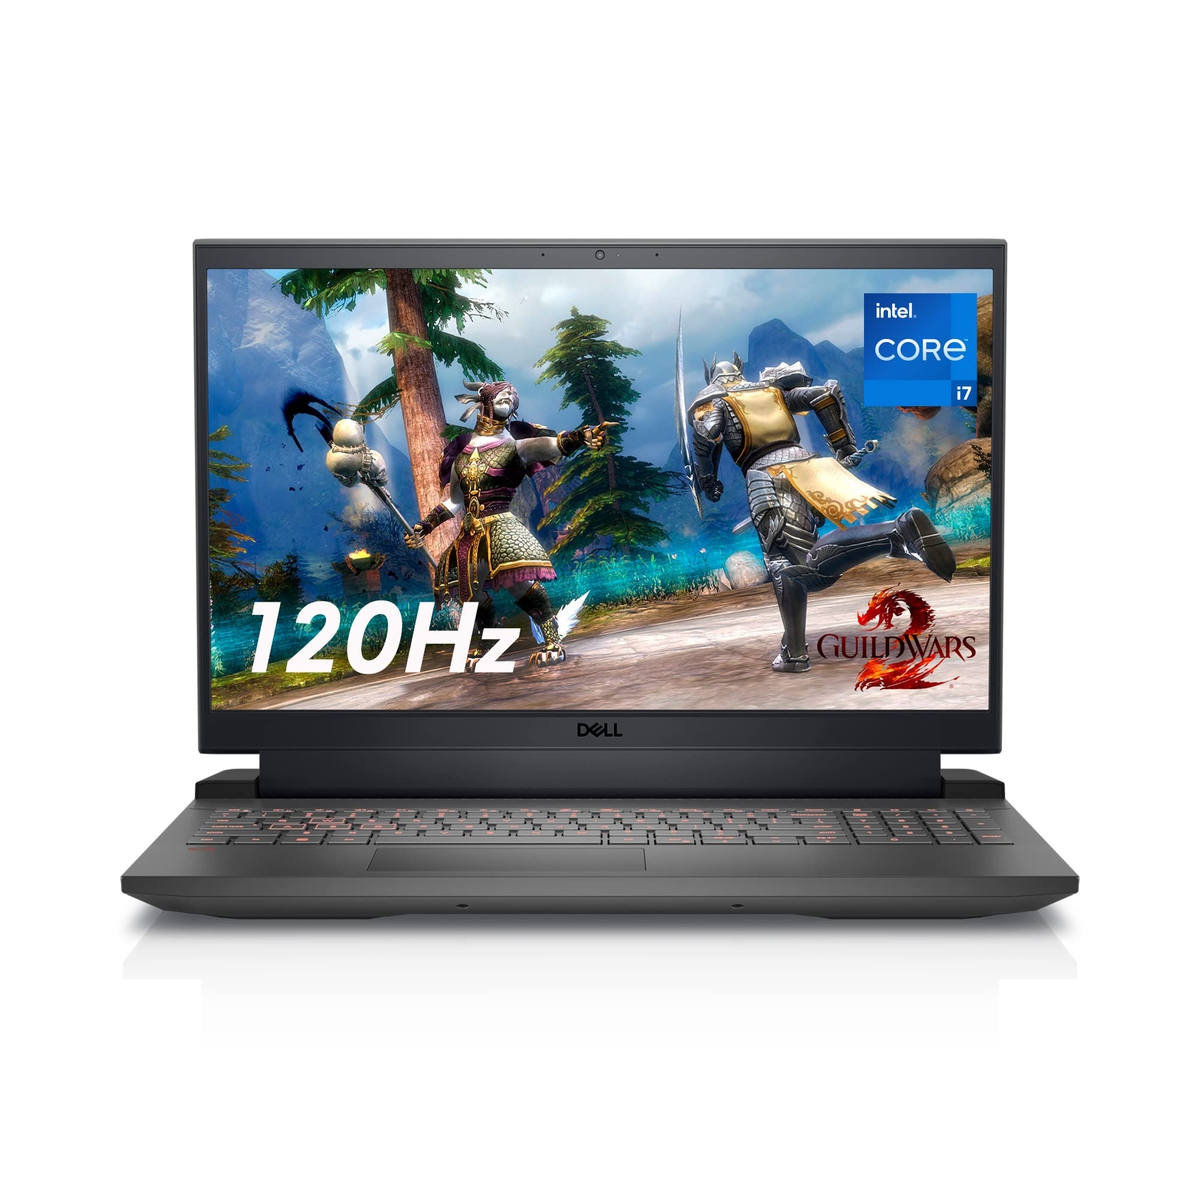 Dell g15-i5 gaming laptop